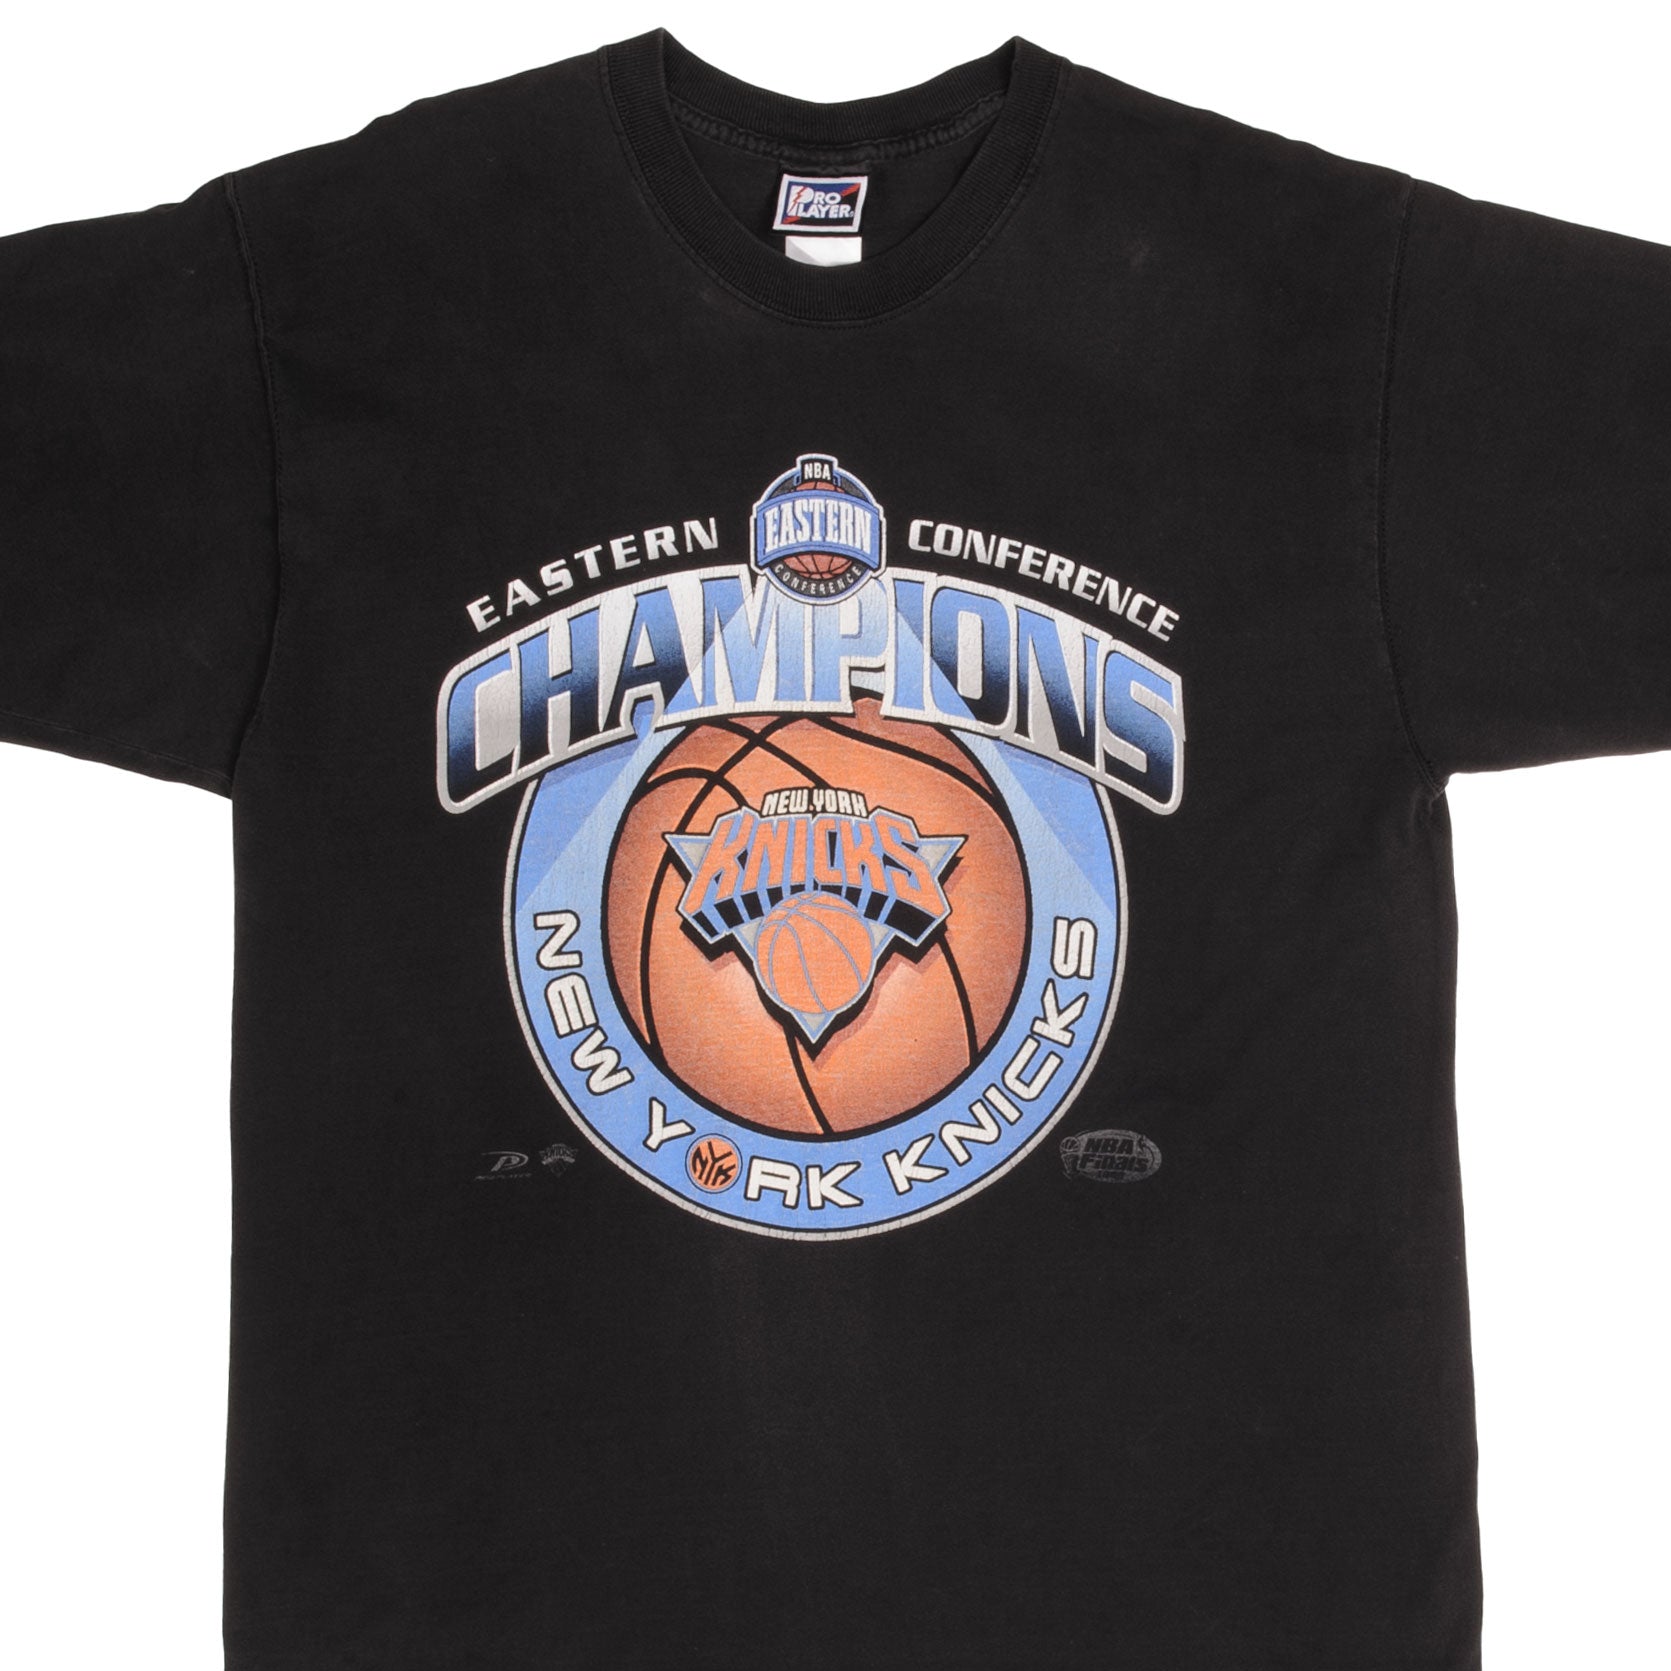 Official Vintage Nba New York Knicks Eastern Champions 1999 Shirt